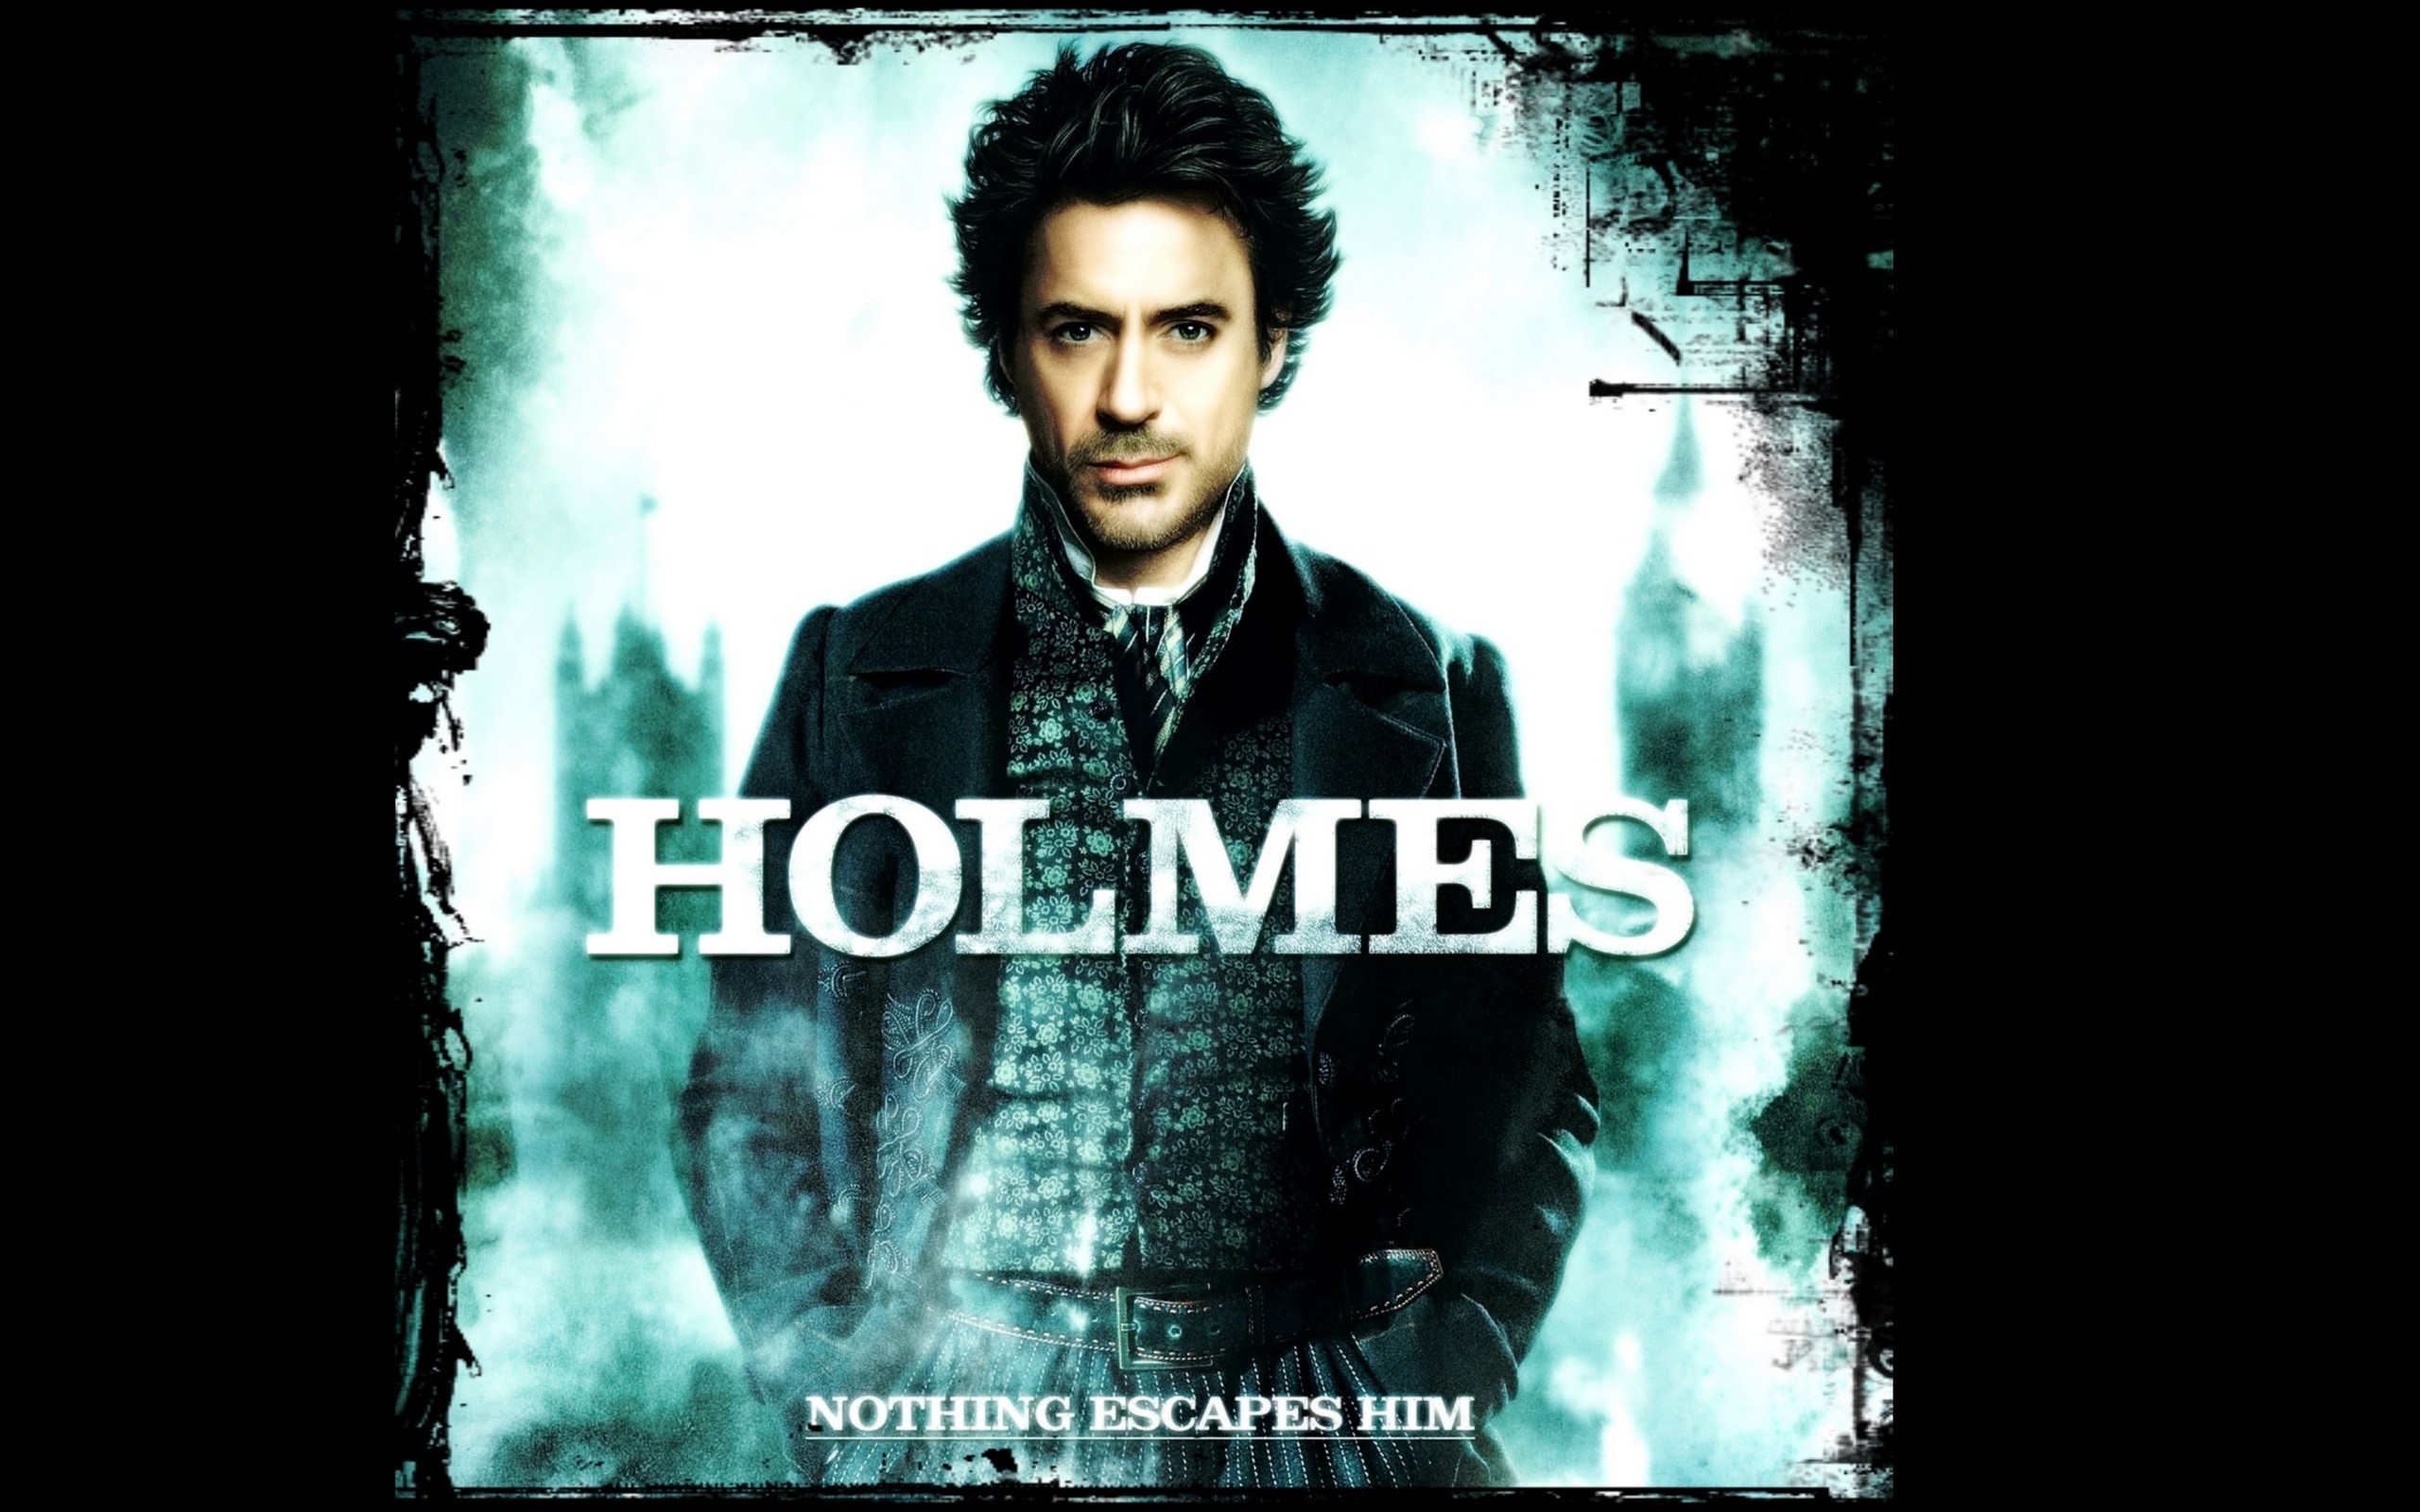 Robert Downey Jr - Sherlock Holmes 2009 Movie Poster - HD Wallpaper 